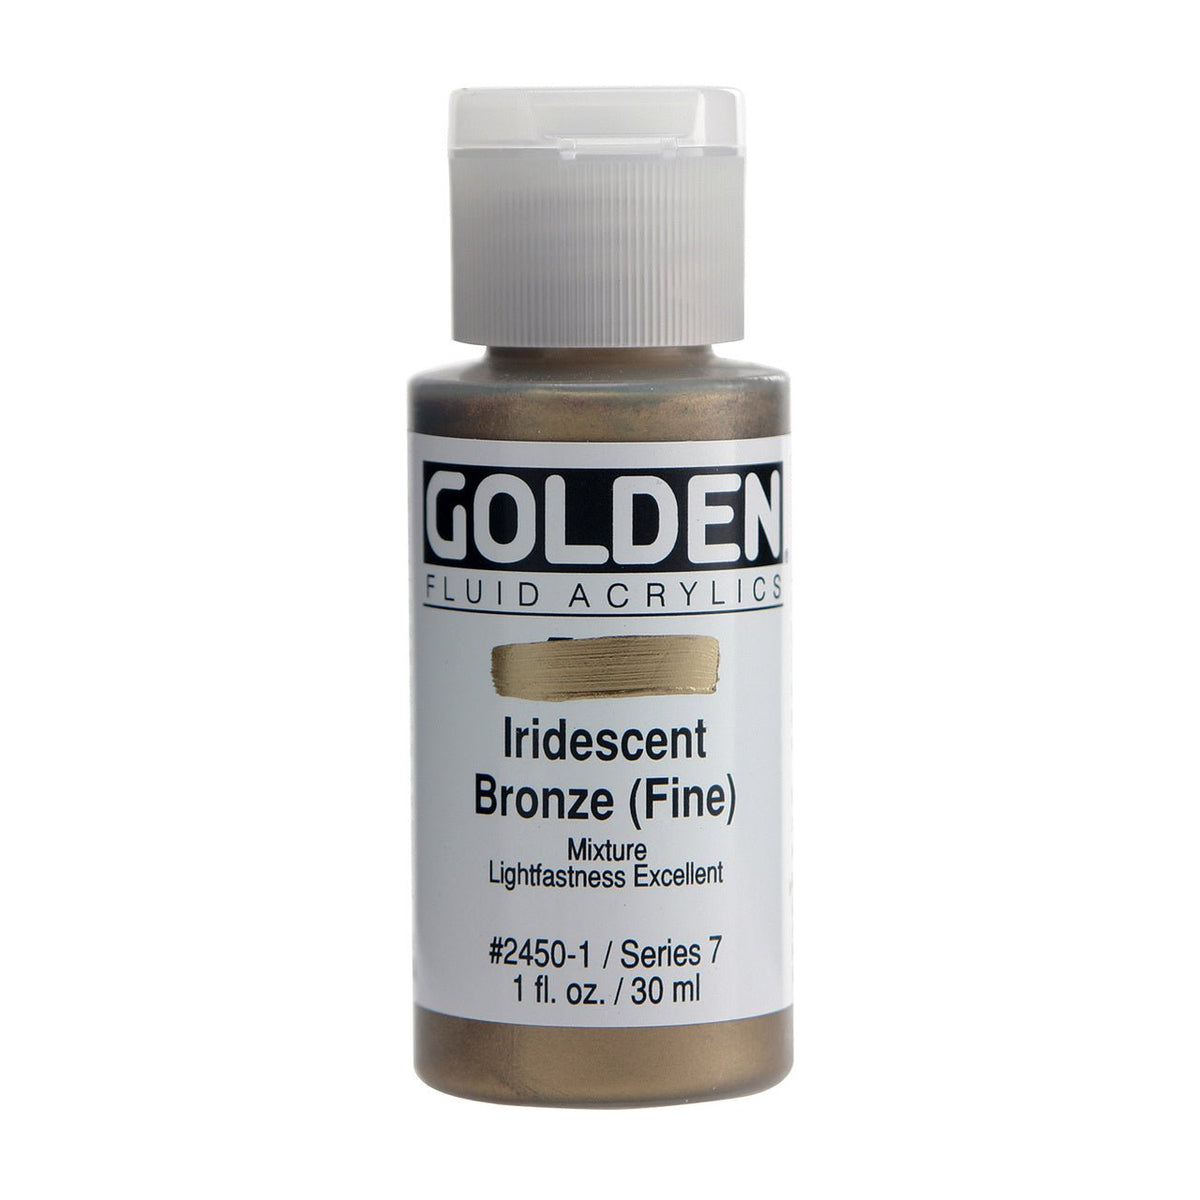 Golden Fluid Acrylic Iridescent Bronze (fine) 1 oz - merriartist.com